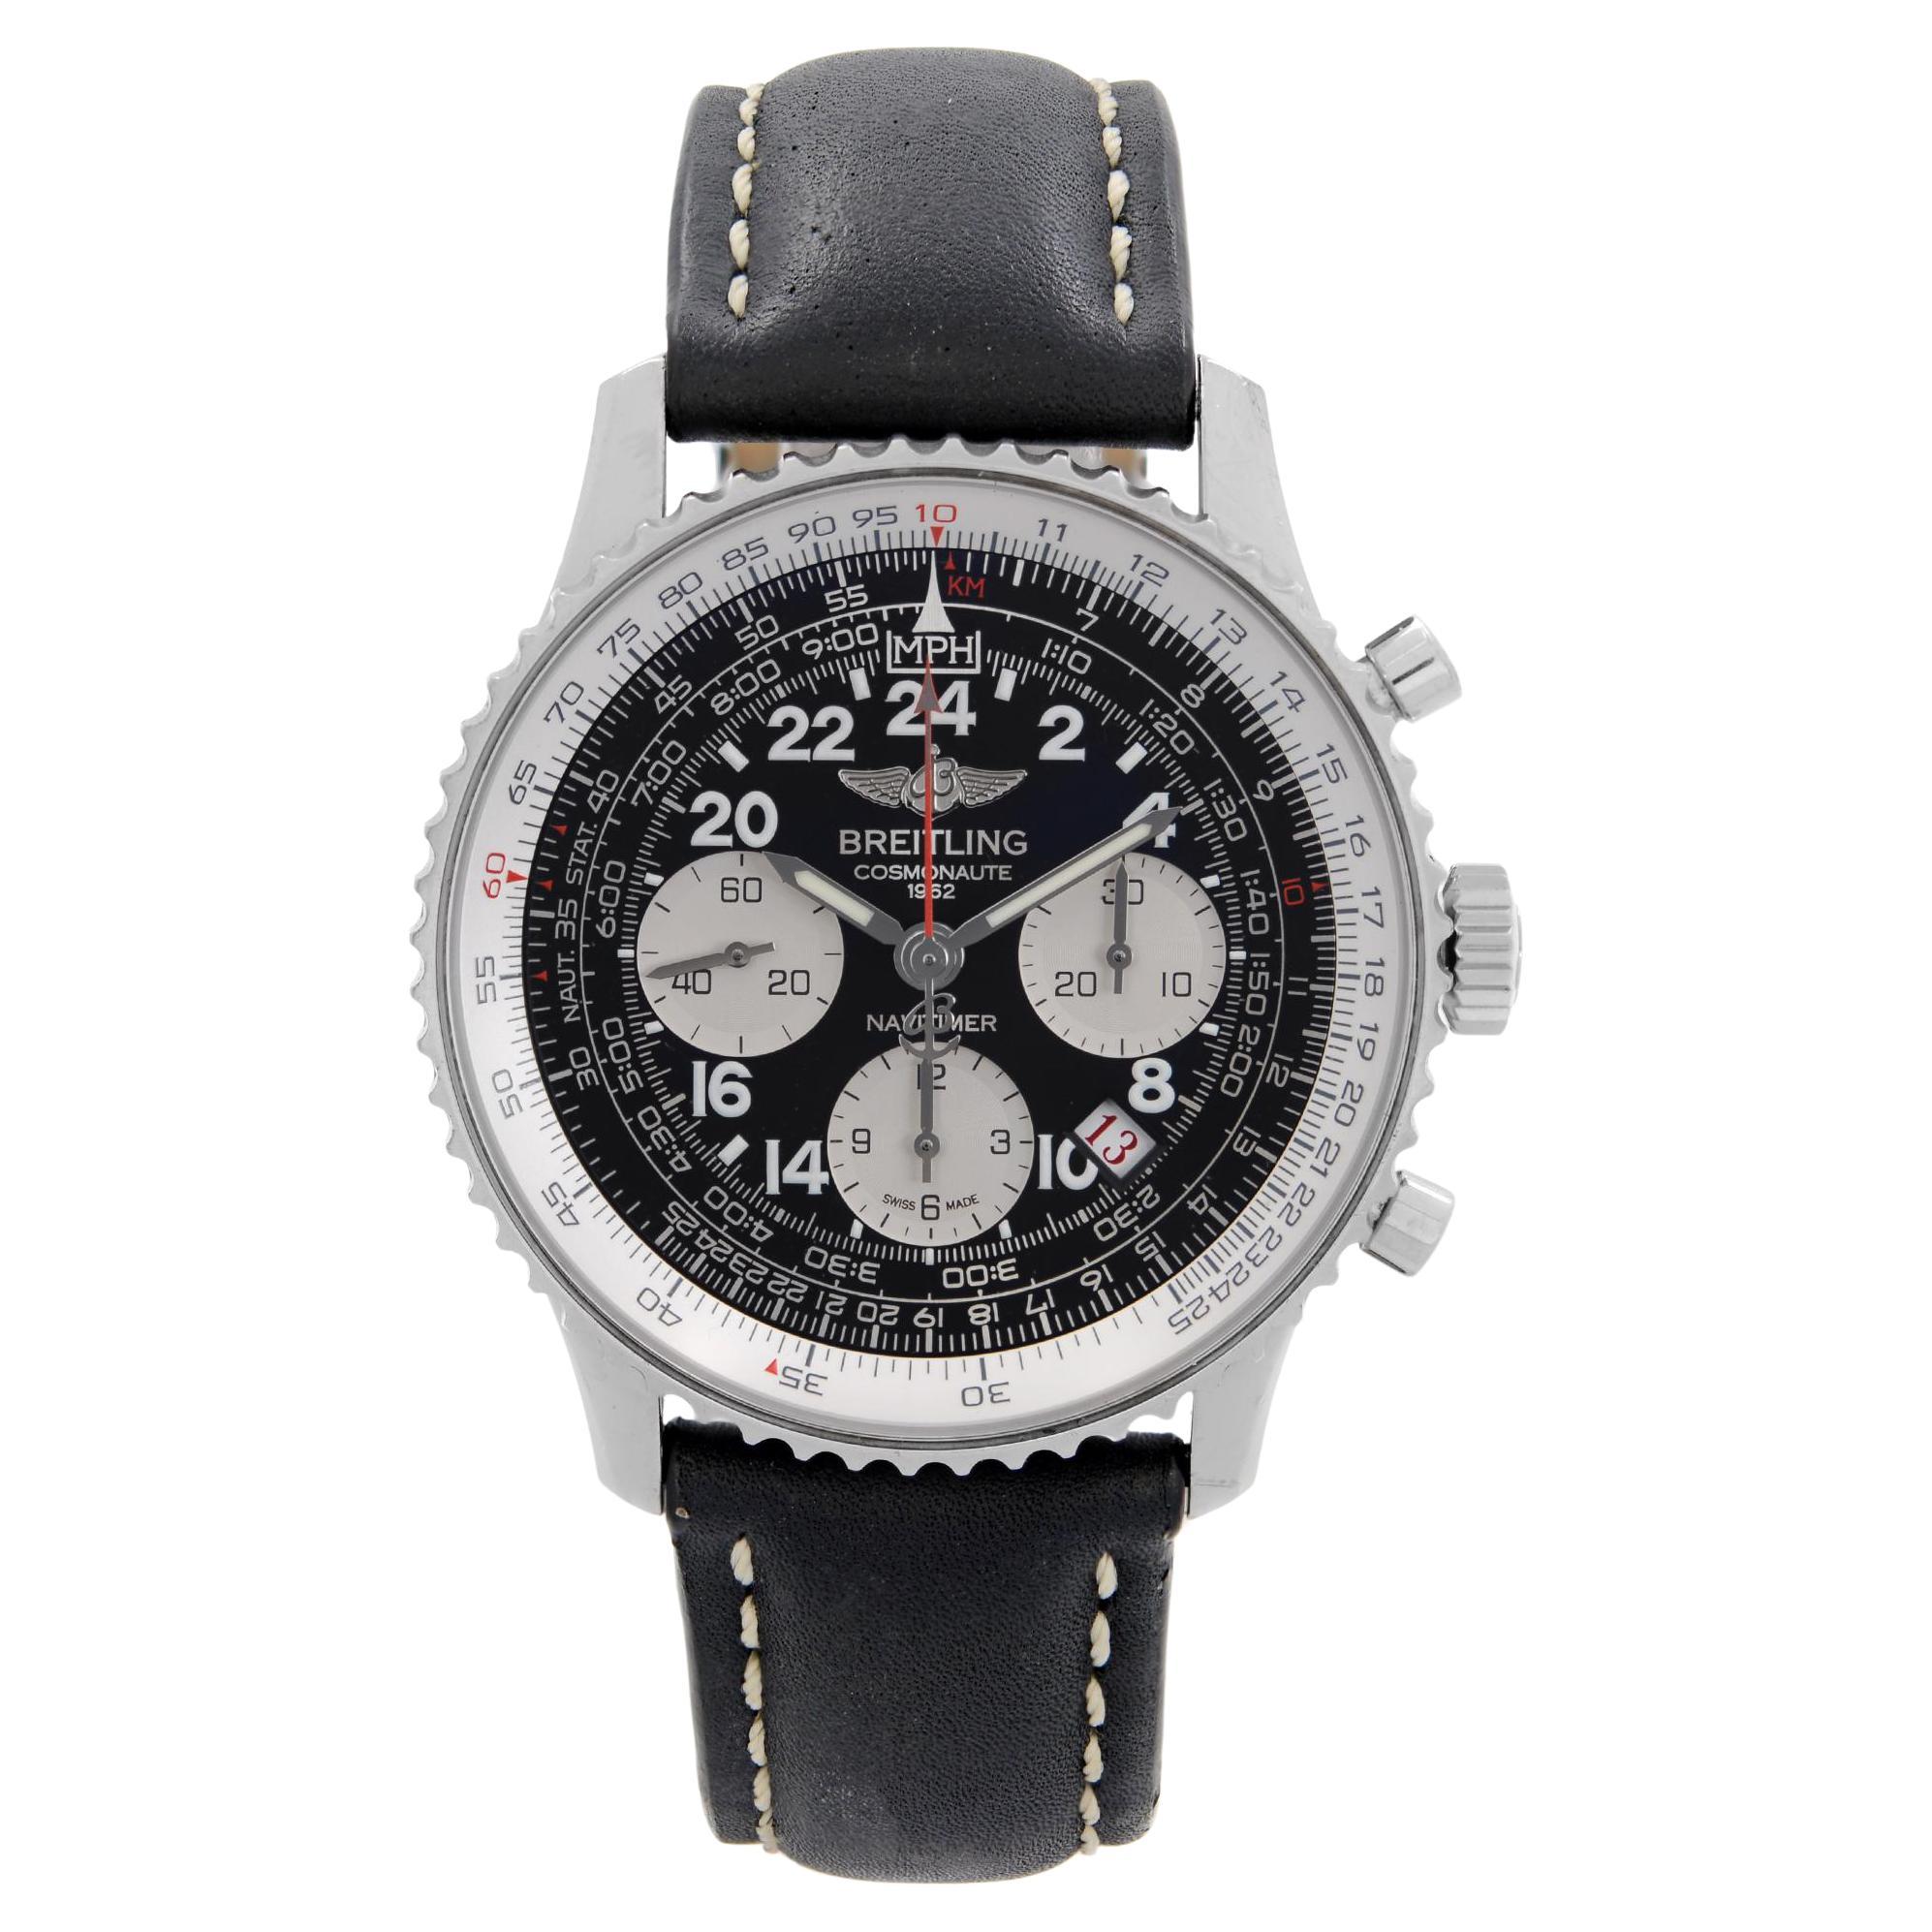 Breitling Navitimer Cosmonaute Steel Black Dial Mens Watch AB021012/BB59-435X